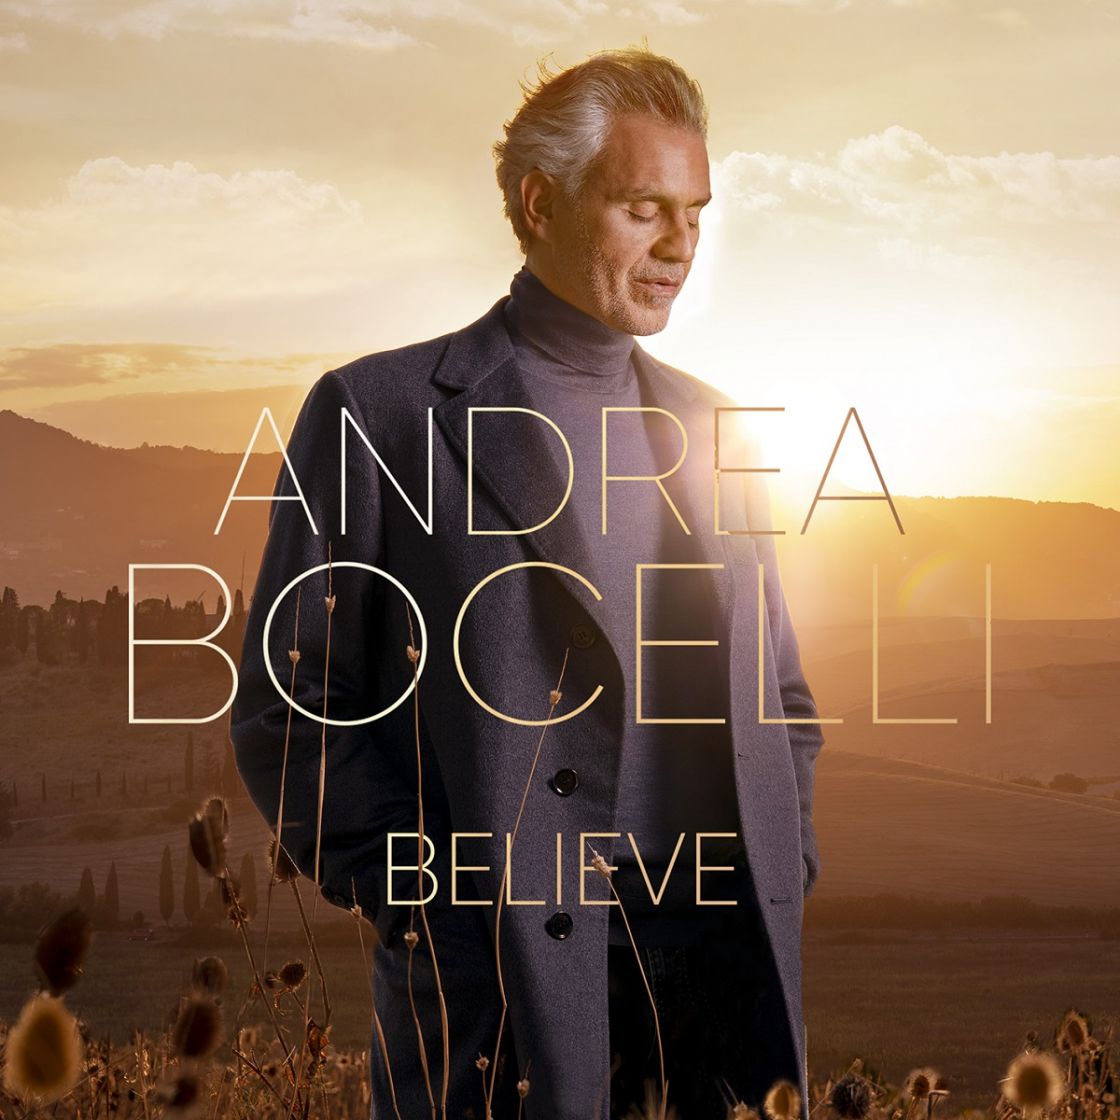 ANDREA BOCELLI - BELIEVE premiera albumu